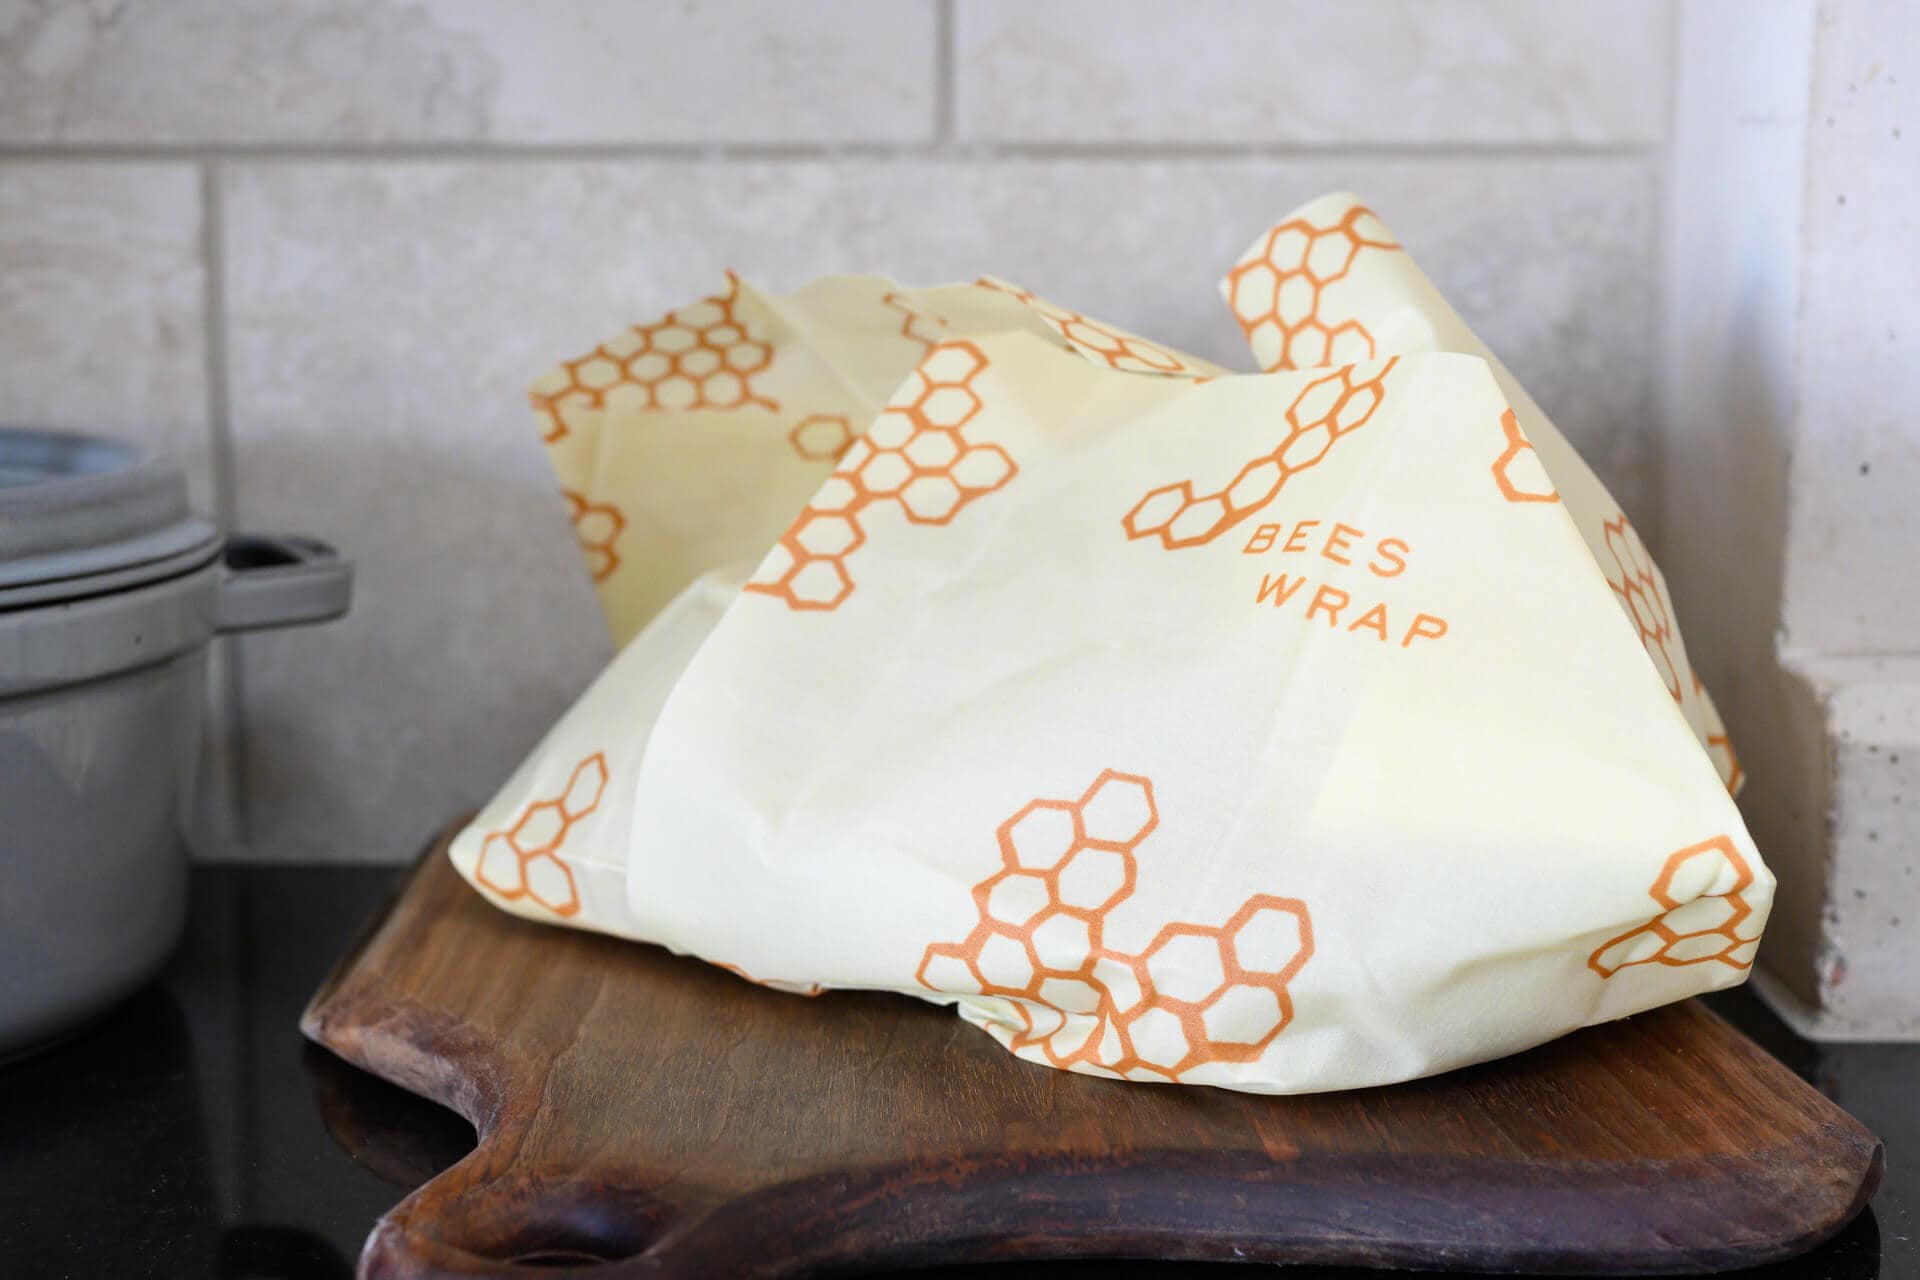 Bee's Wrap Holding Sourdough Bread